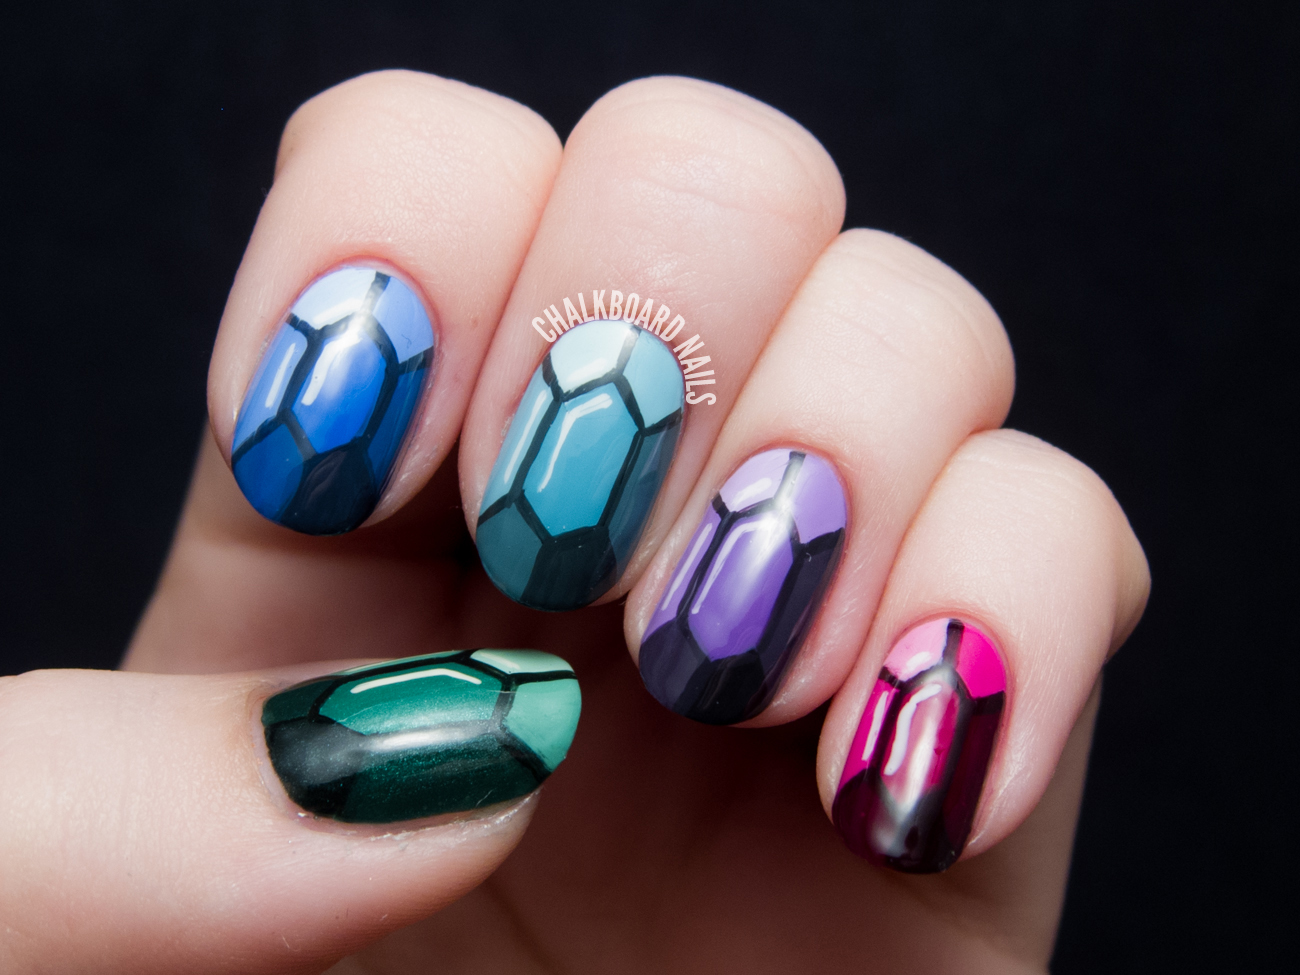 Nail art gems - wide 3